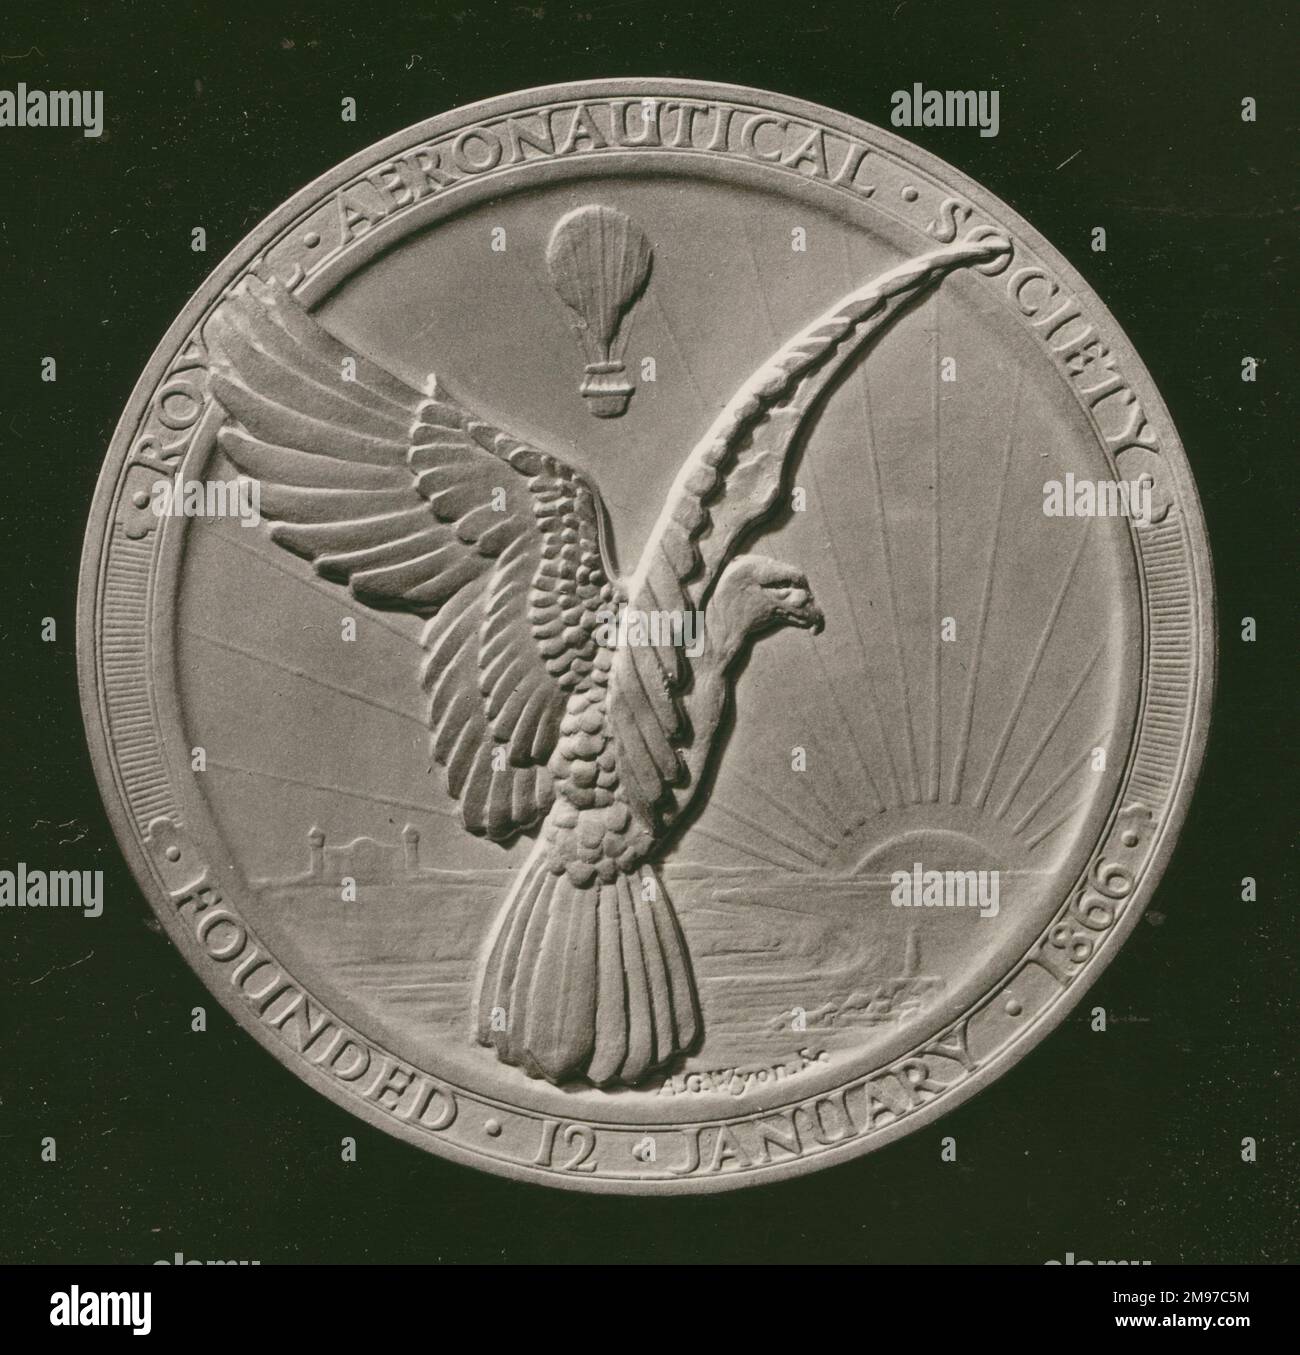 Medaglia d'argento britannica per l'aeronautica, obverse, 1933. Foto Stock